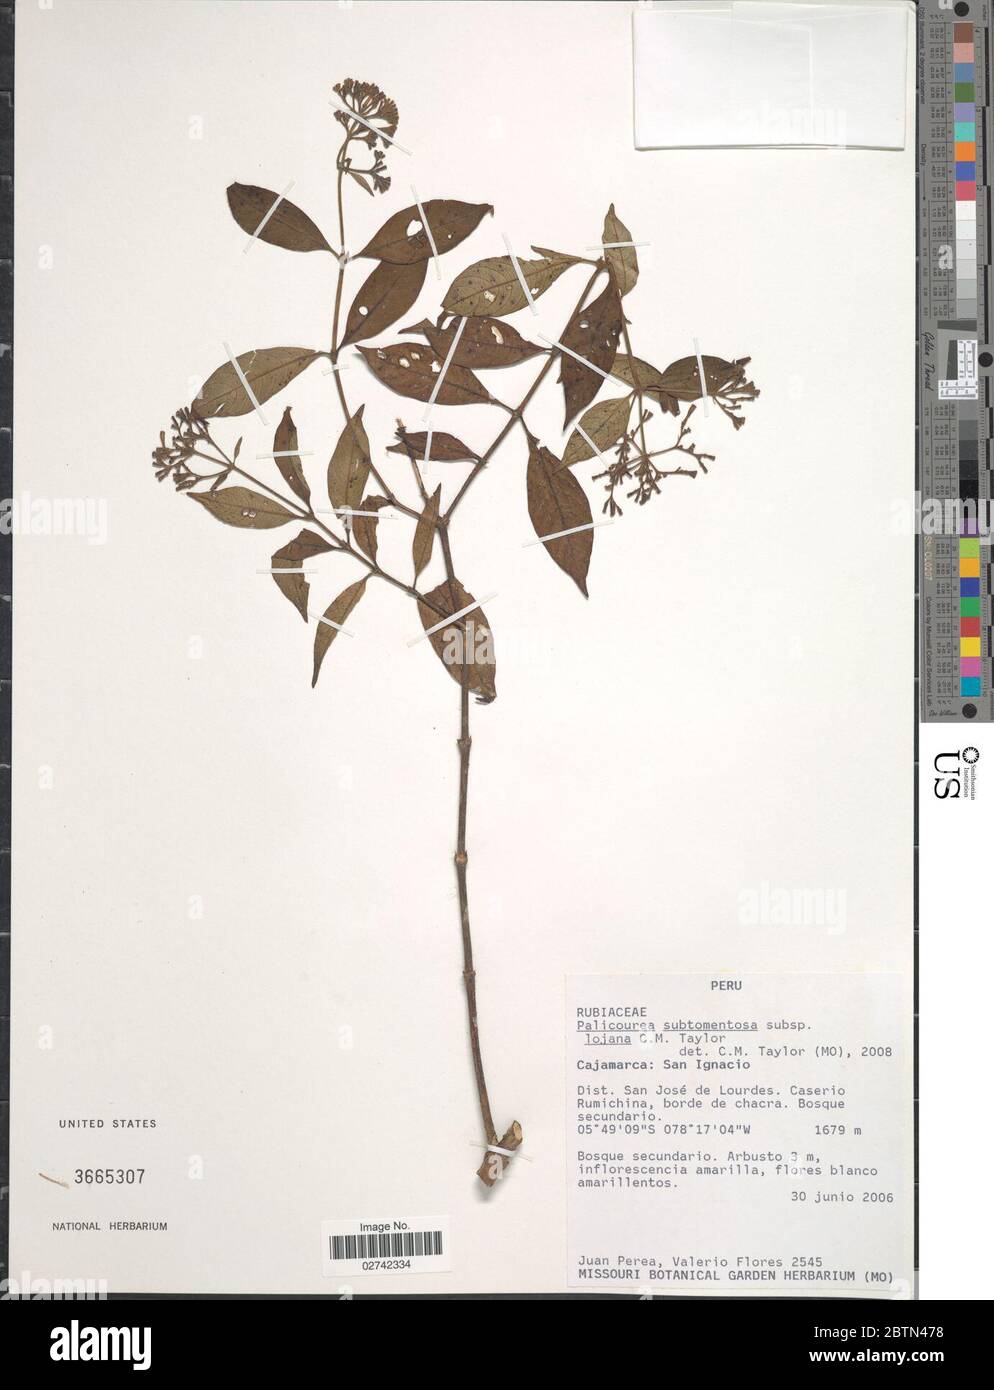 Palicourea subtomentosa subsp lojana CM Taylor. 19 Dec 20171 Stock Photo